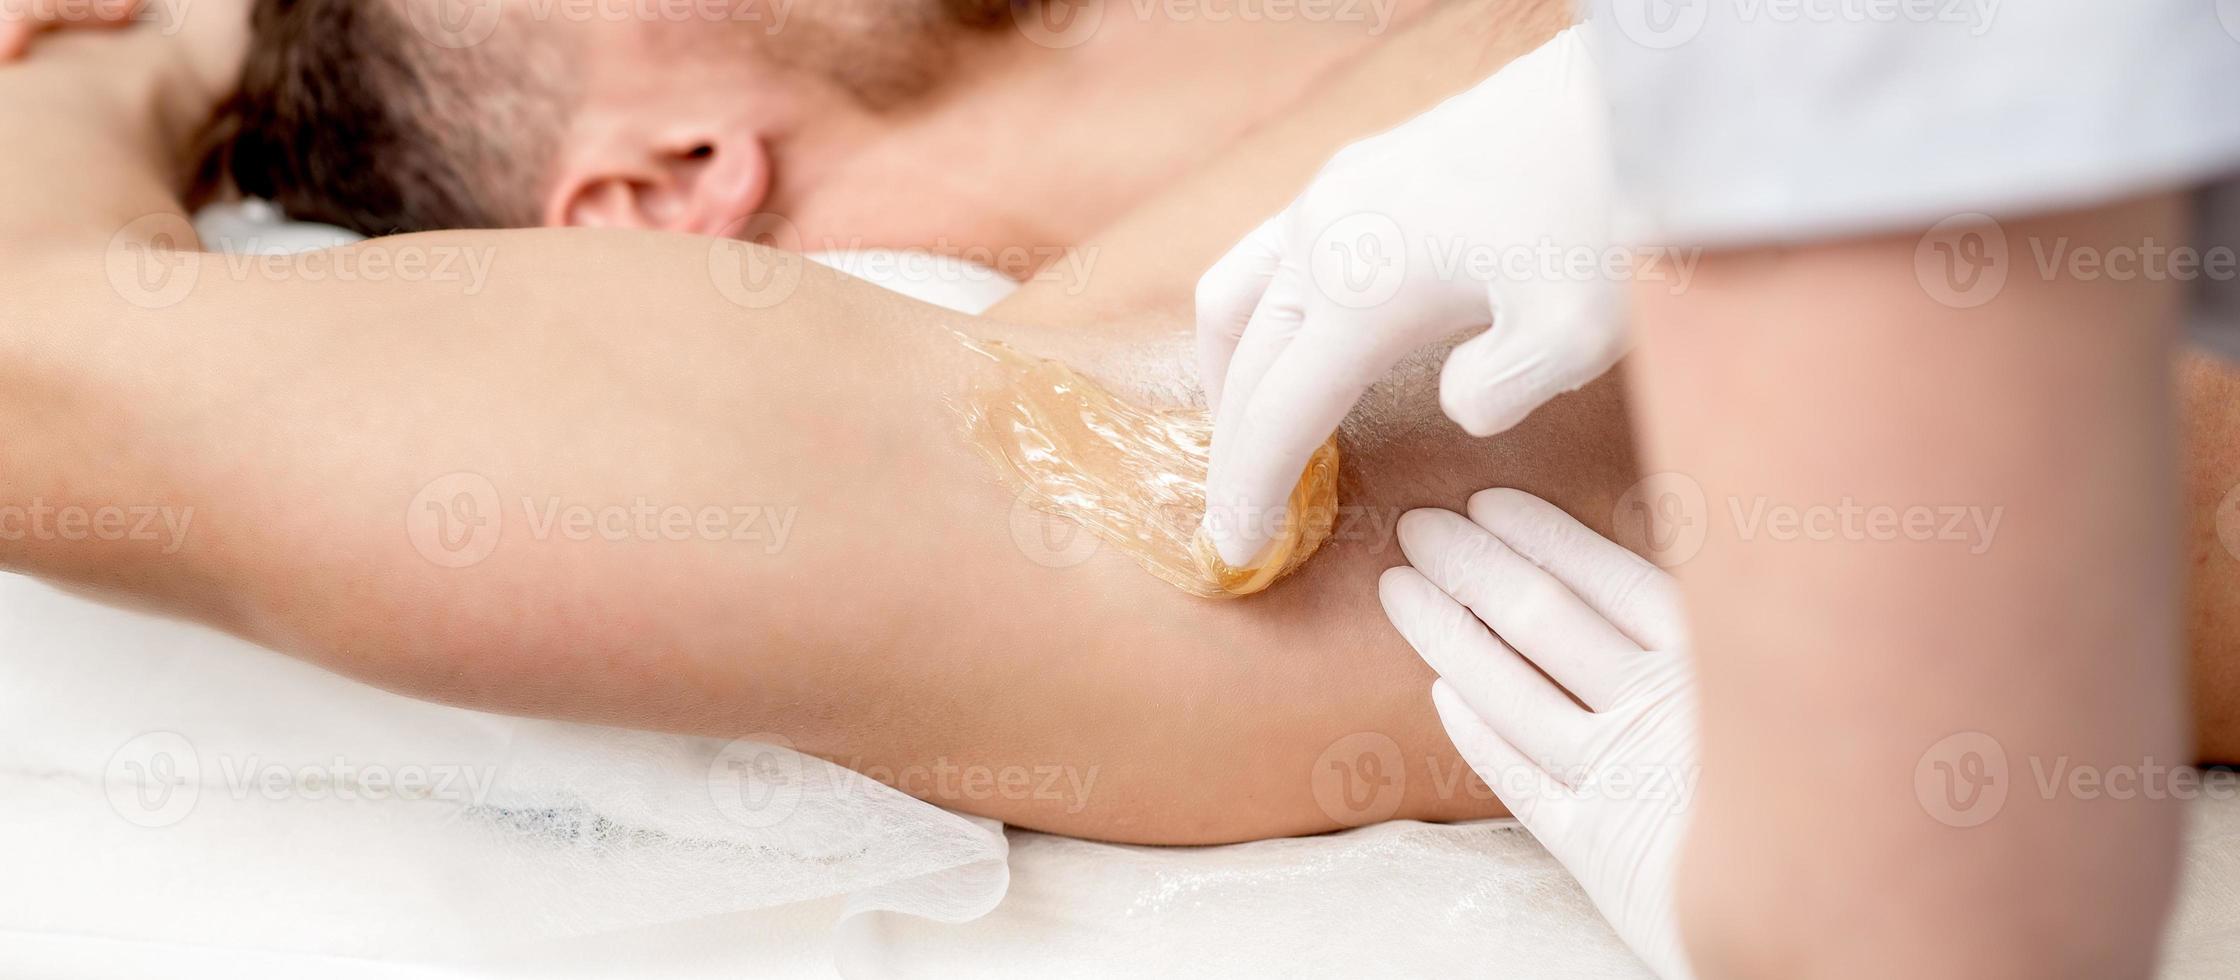 cosmetóloga aplicando pasta de cera en la axila masculina foto